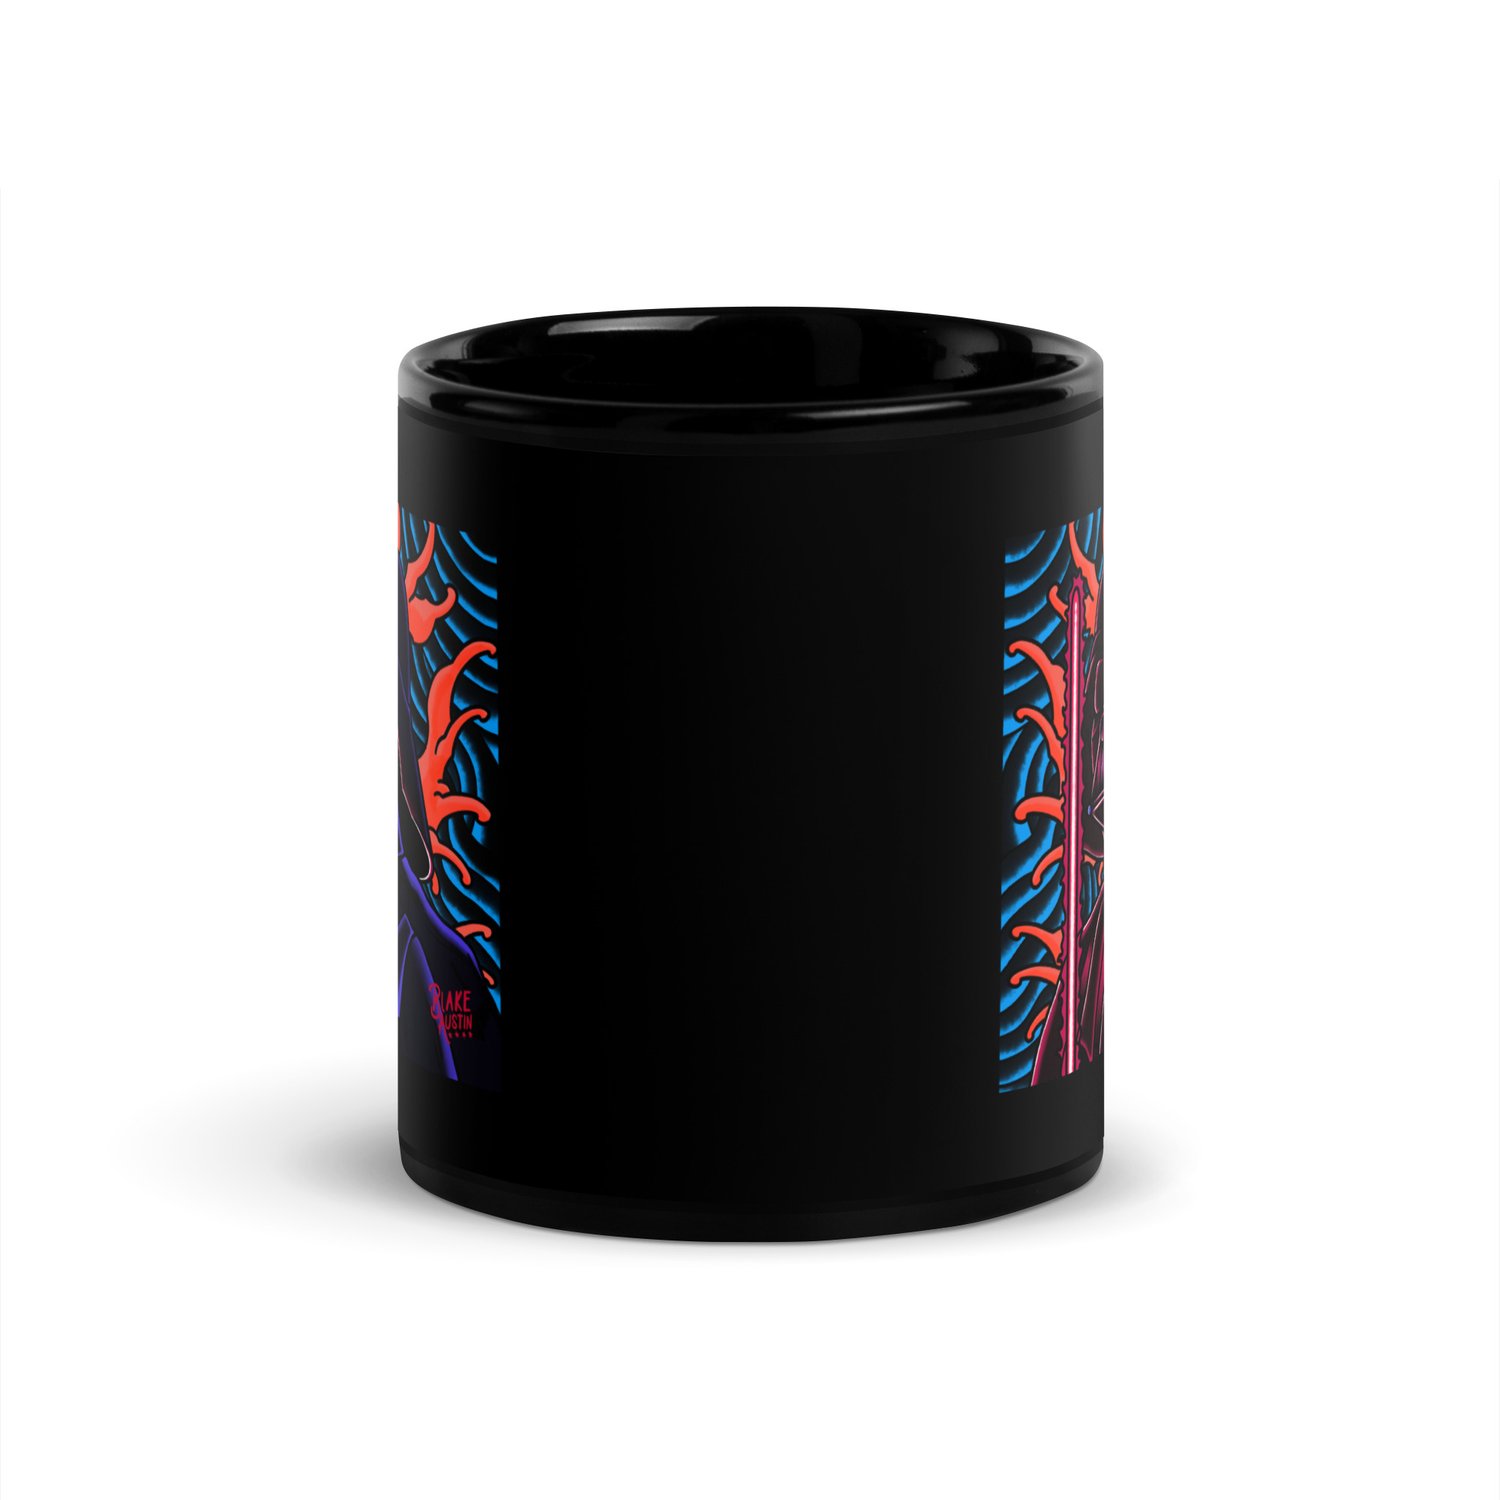 Image of Vader 11oz black glossy mug